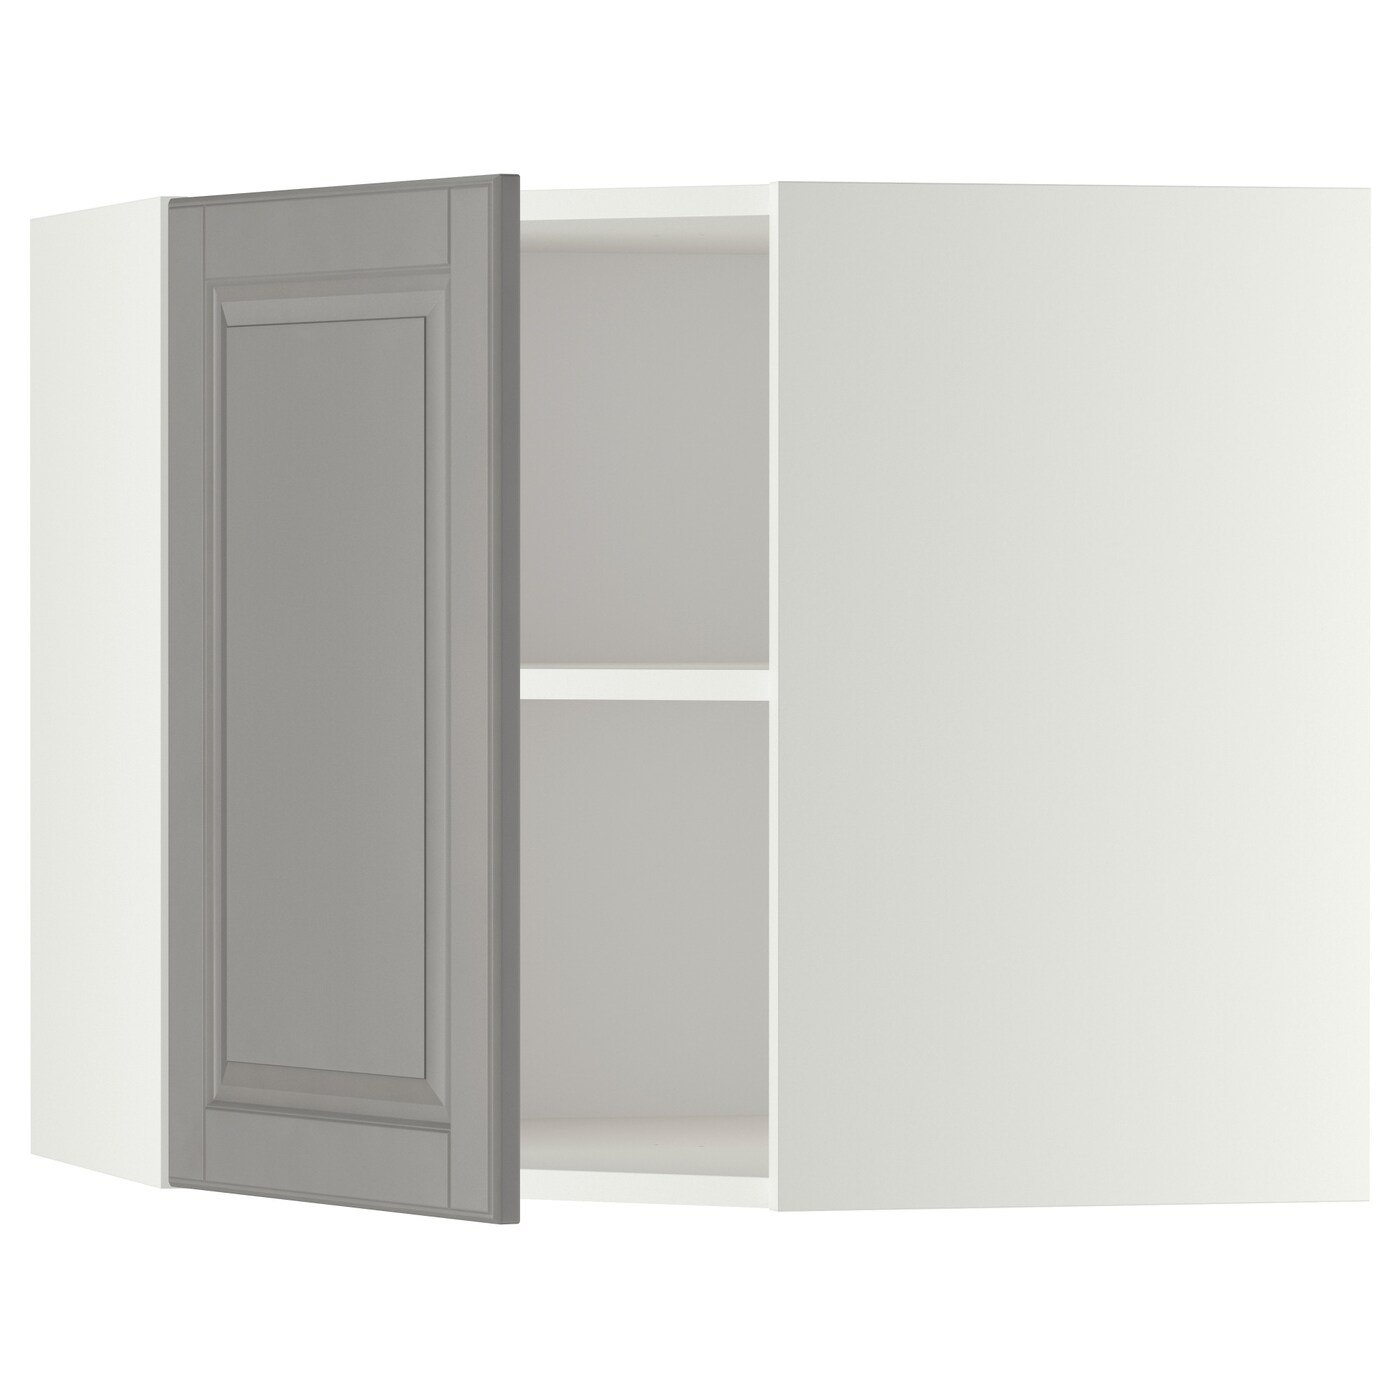 METOD Навесной шкаф - METOD IKEA/ МЕТОД ИКЕА, 60х68 см, белый/серый